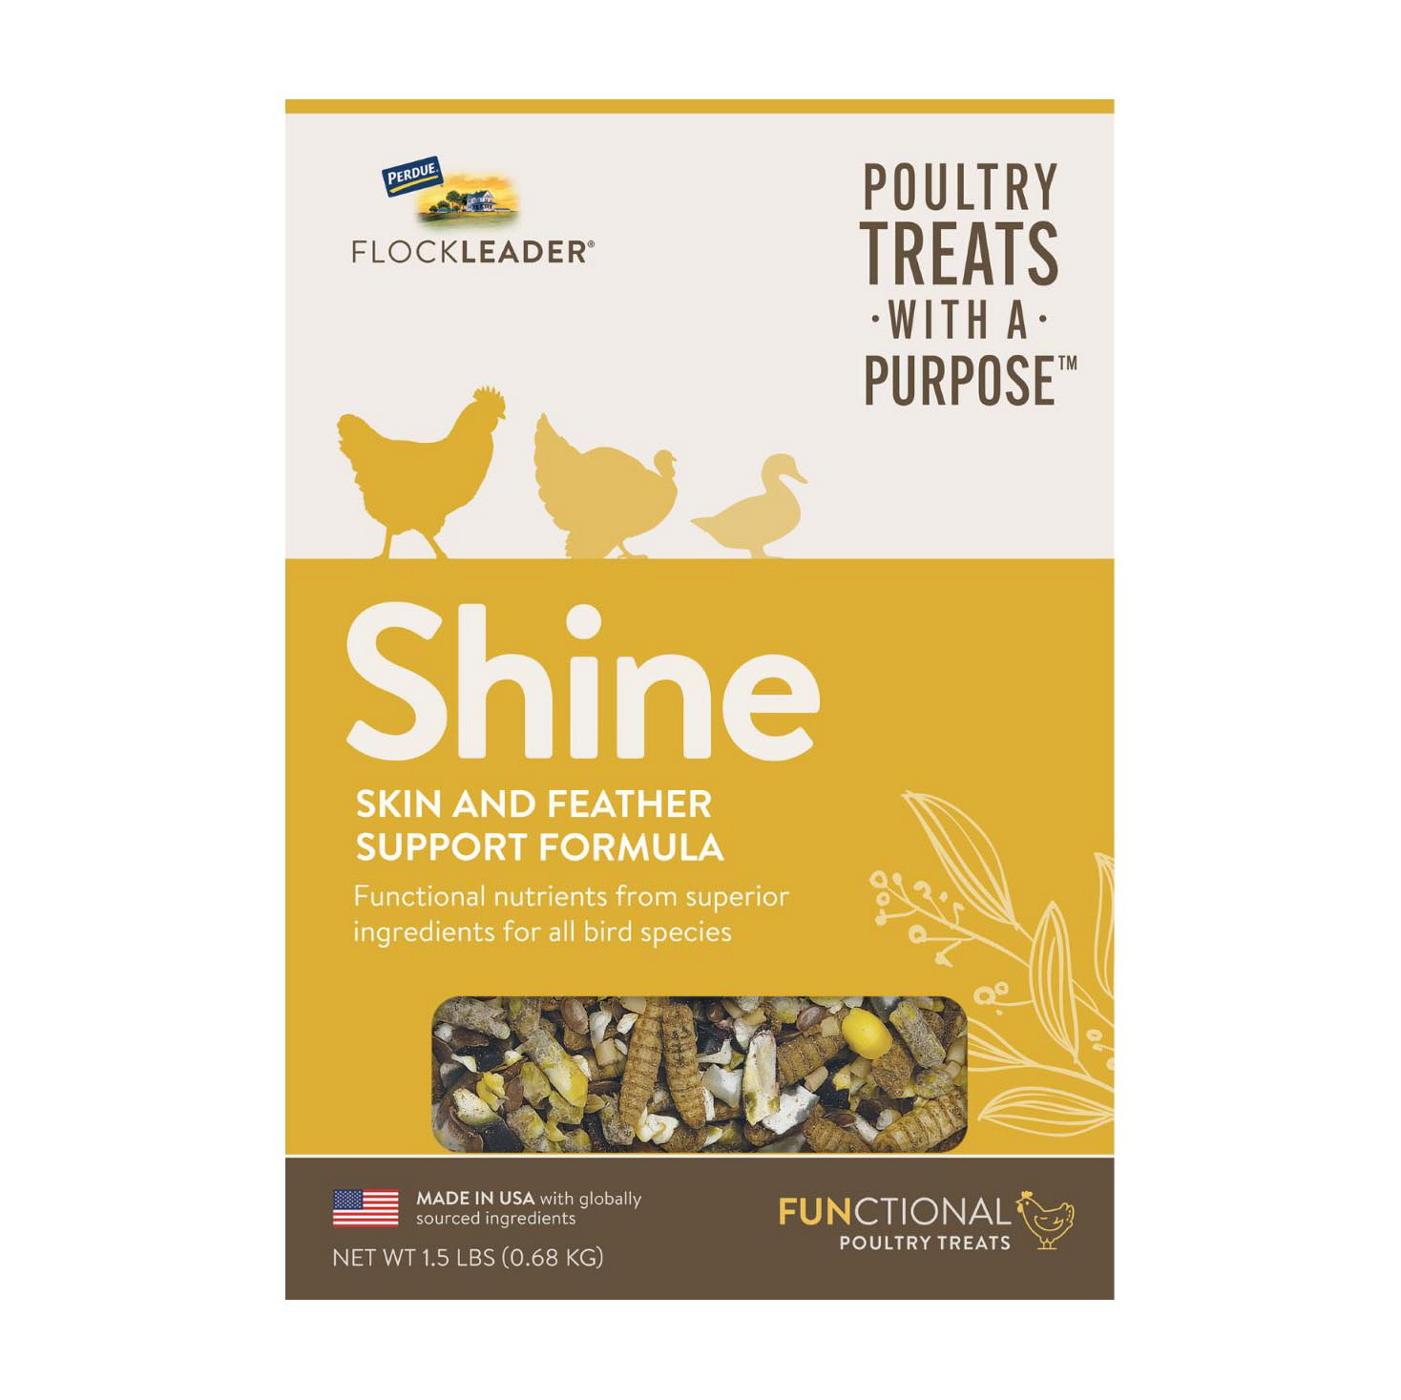 Flockleader Shine Skin & Feather Support Formula Poultry Treats; image 1 of 4